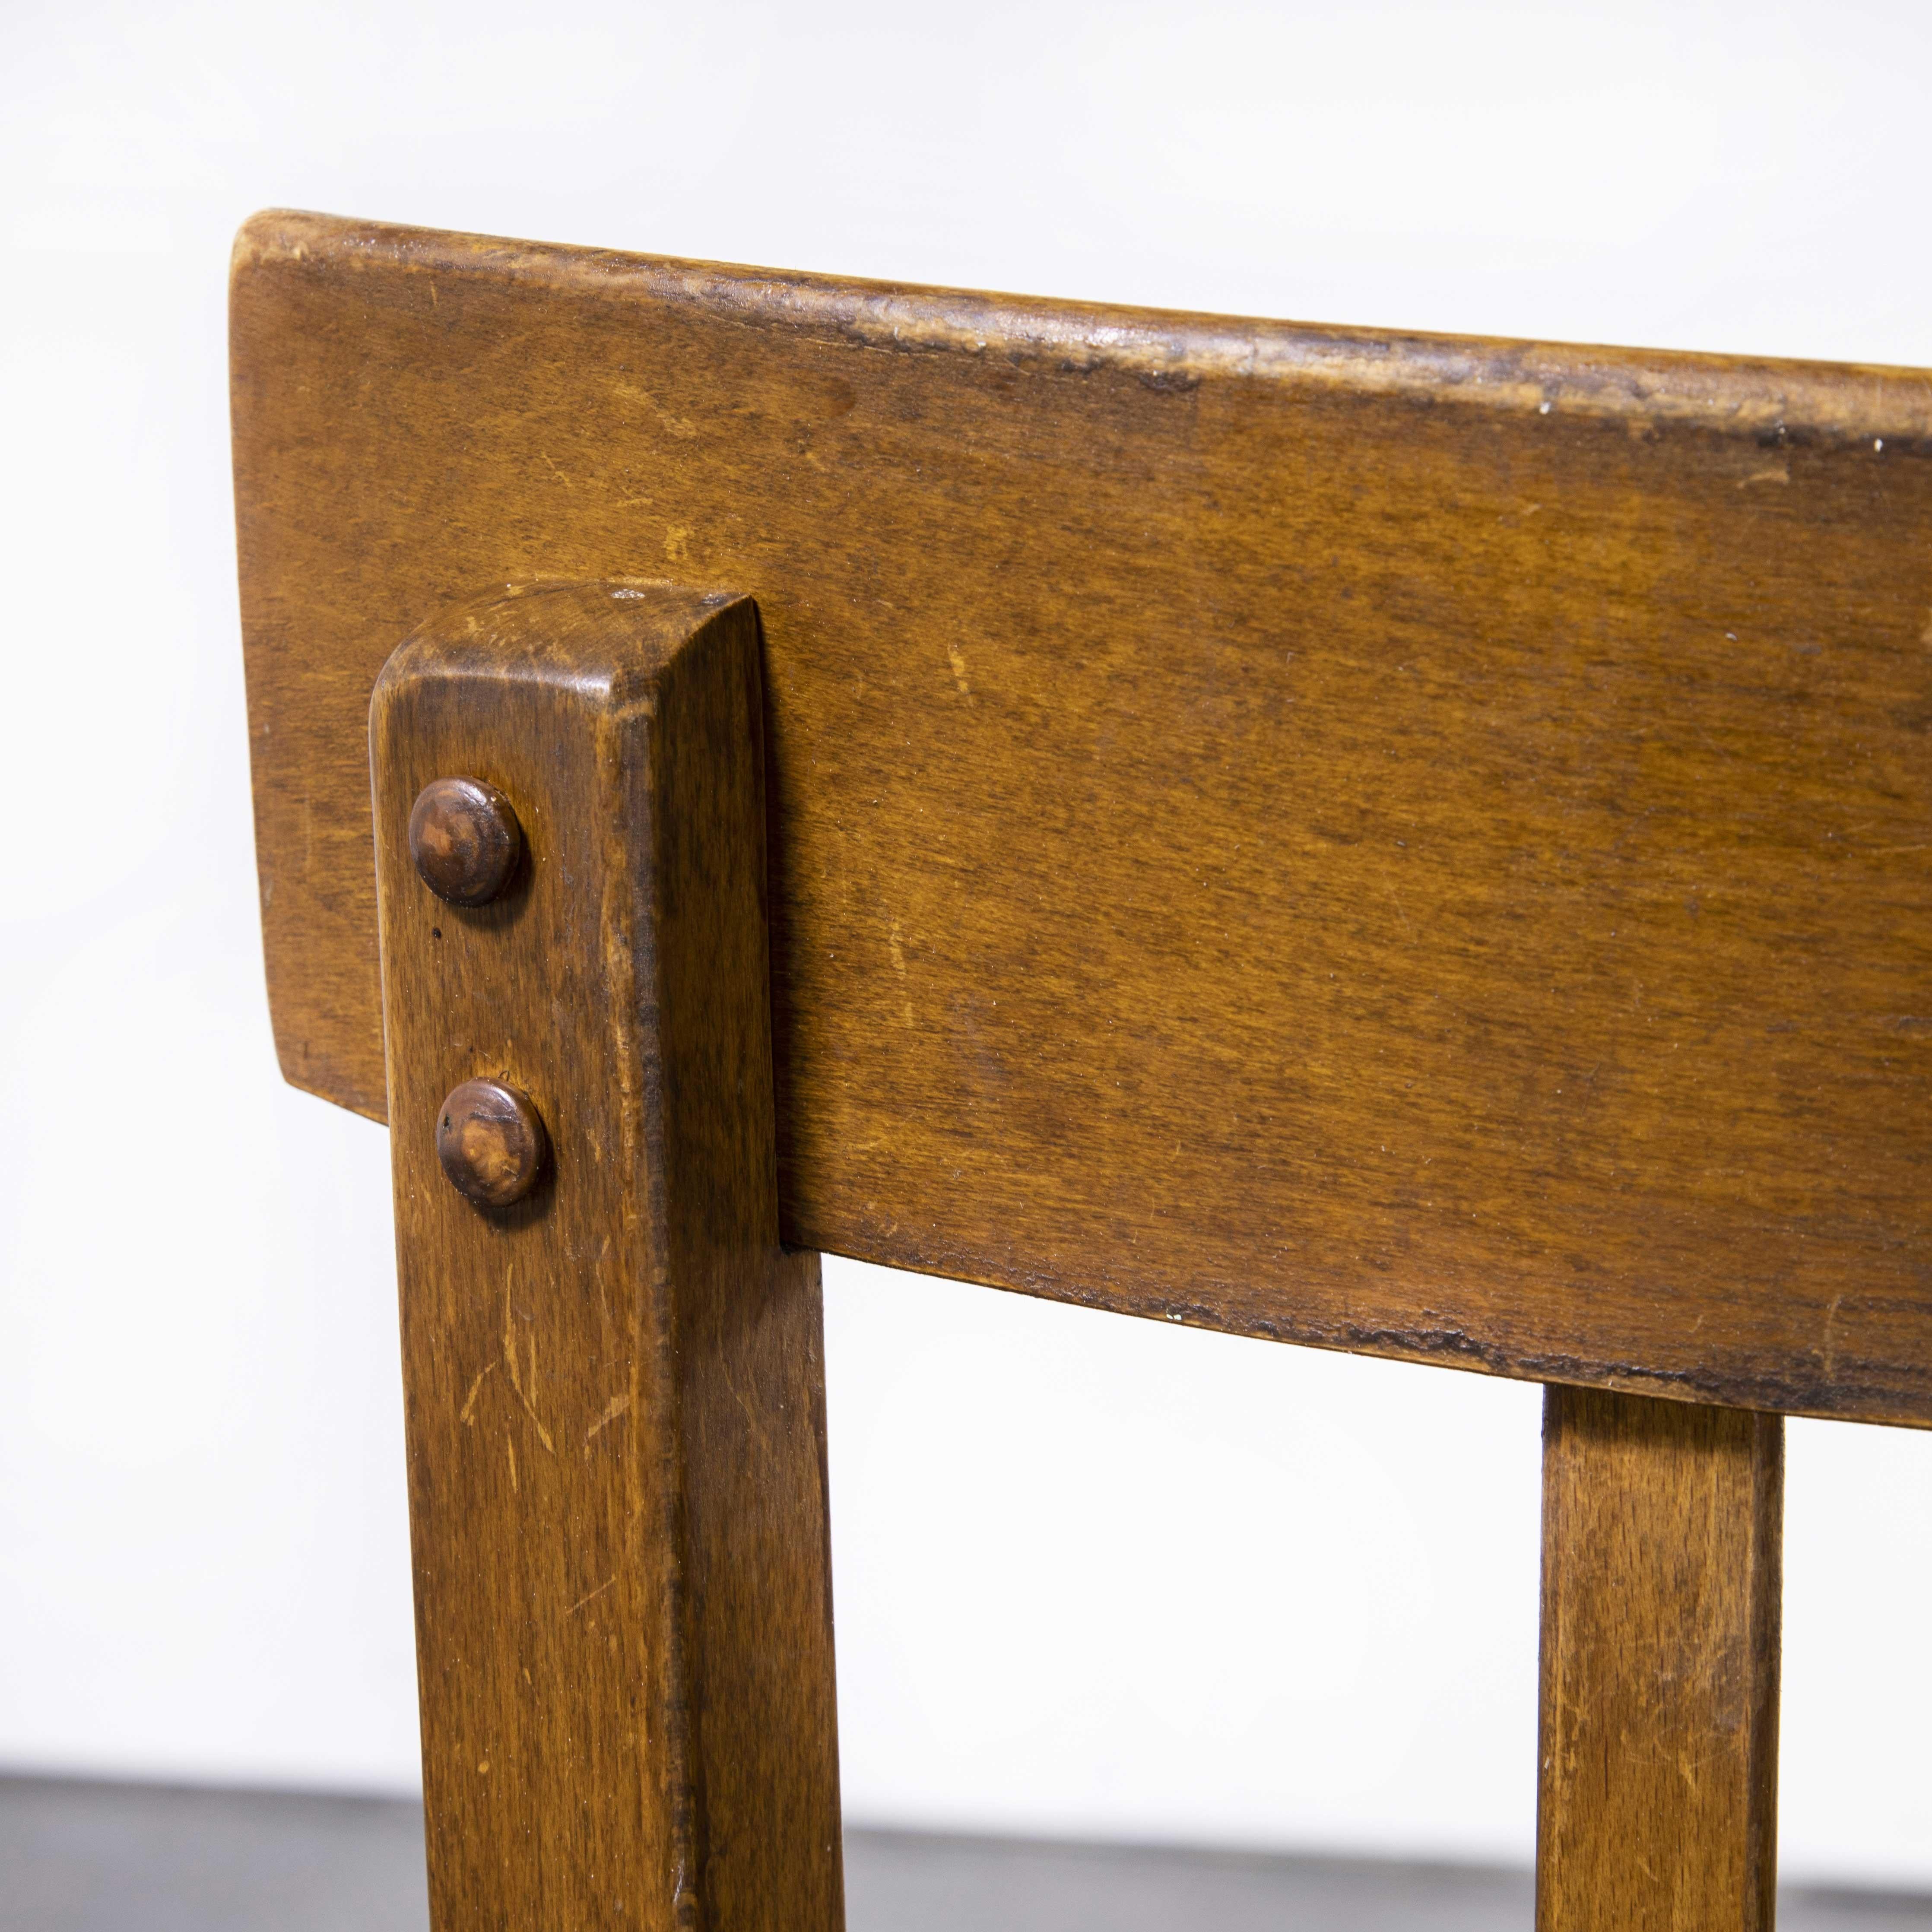 1950’s Baumann bentwood bistro dining chair – set of six (Model 1411)
1960’s Baumann bentwood bistro dining chair – set of six (Model 1411). Classic beech bistro chair made in France by the maker Joamin Baumann. Baumann is a slightly off the radar